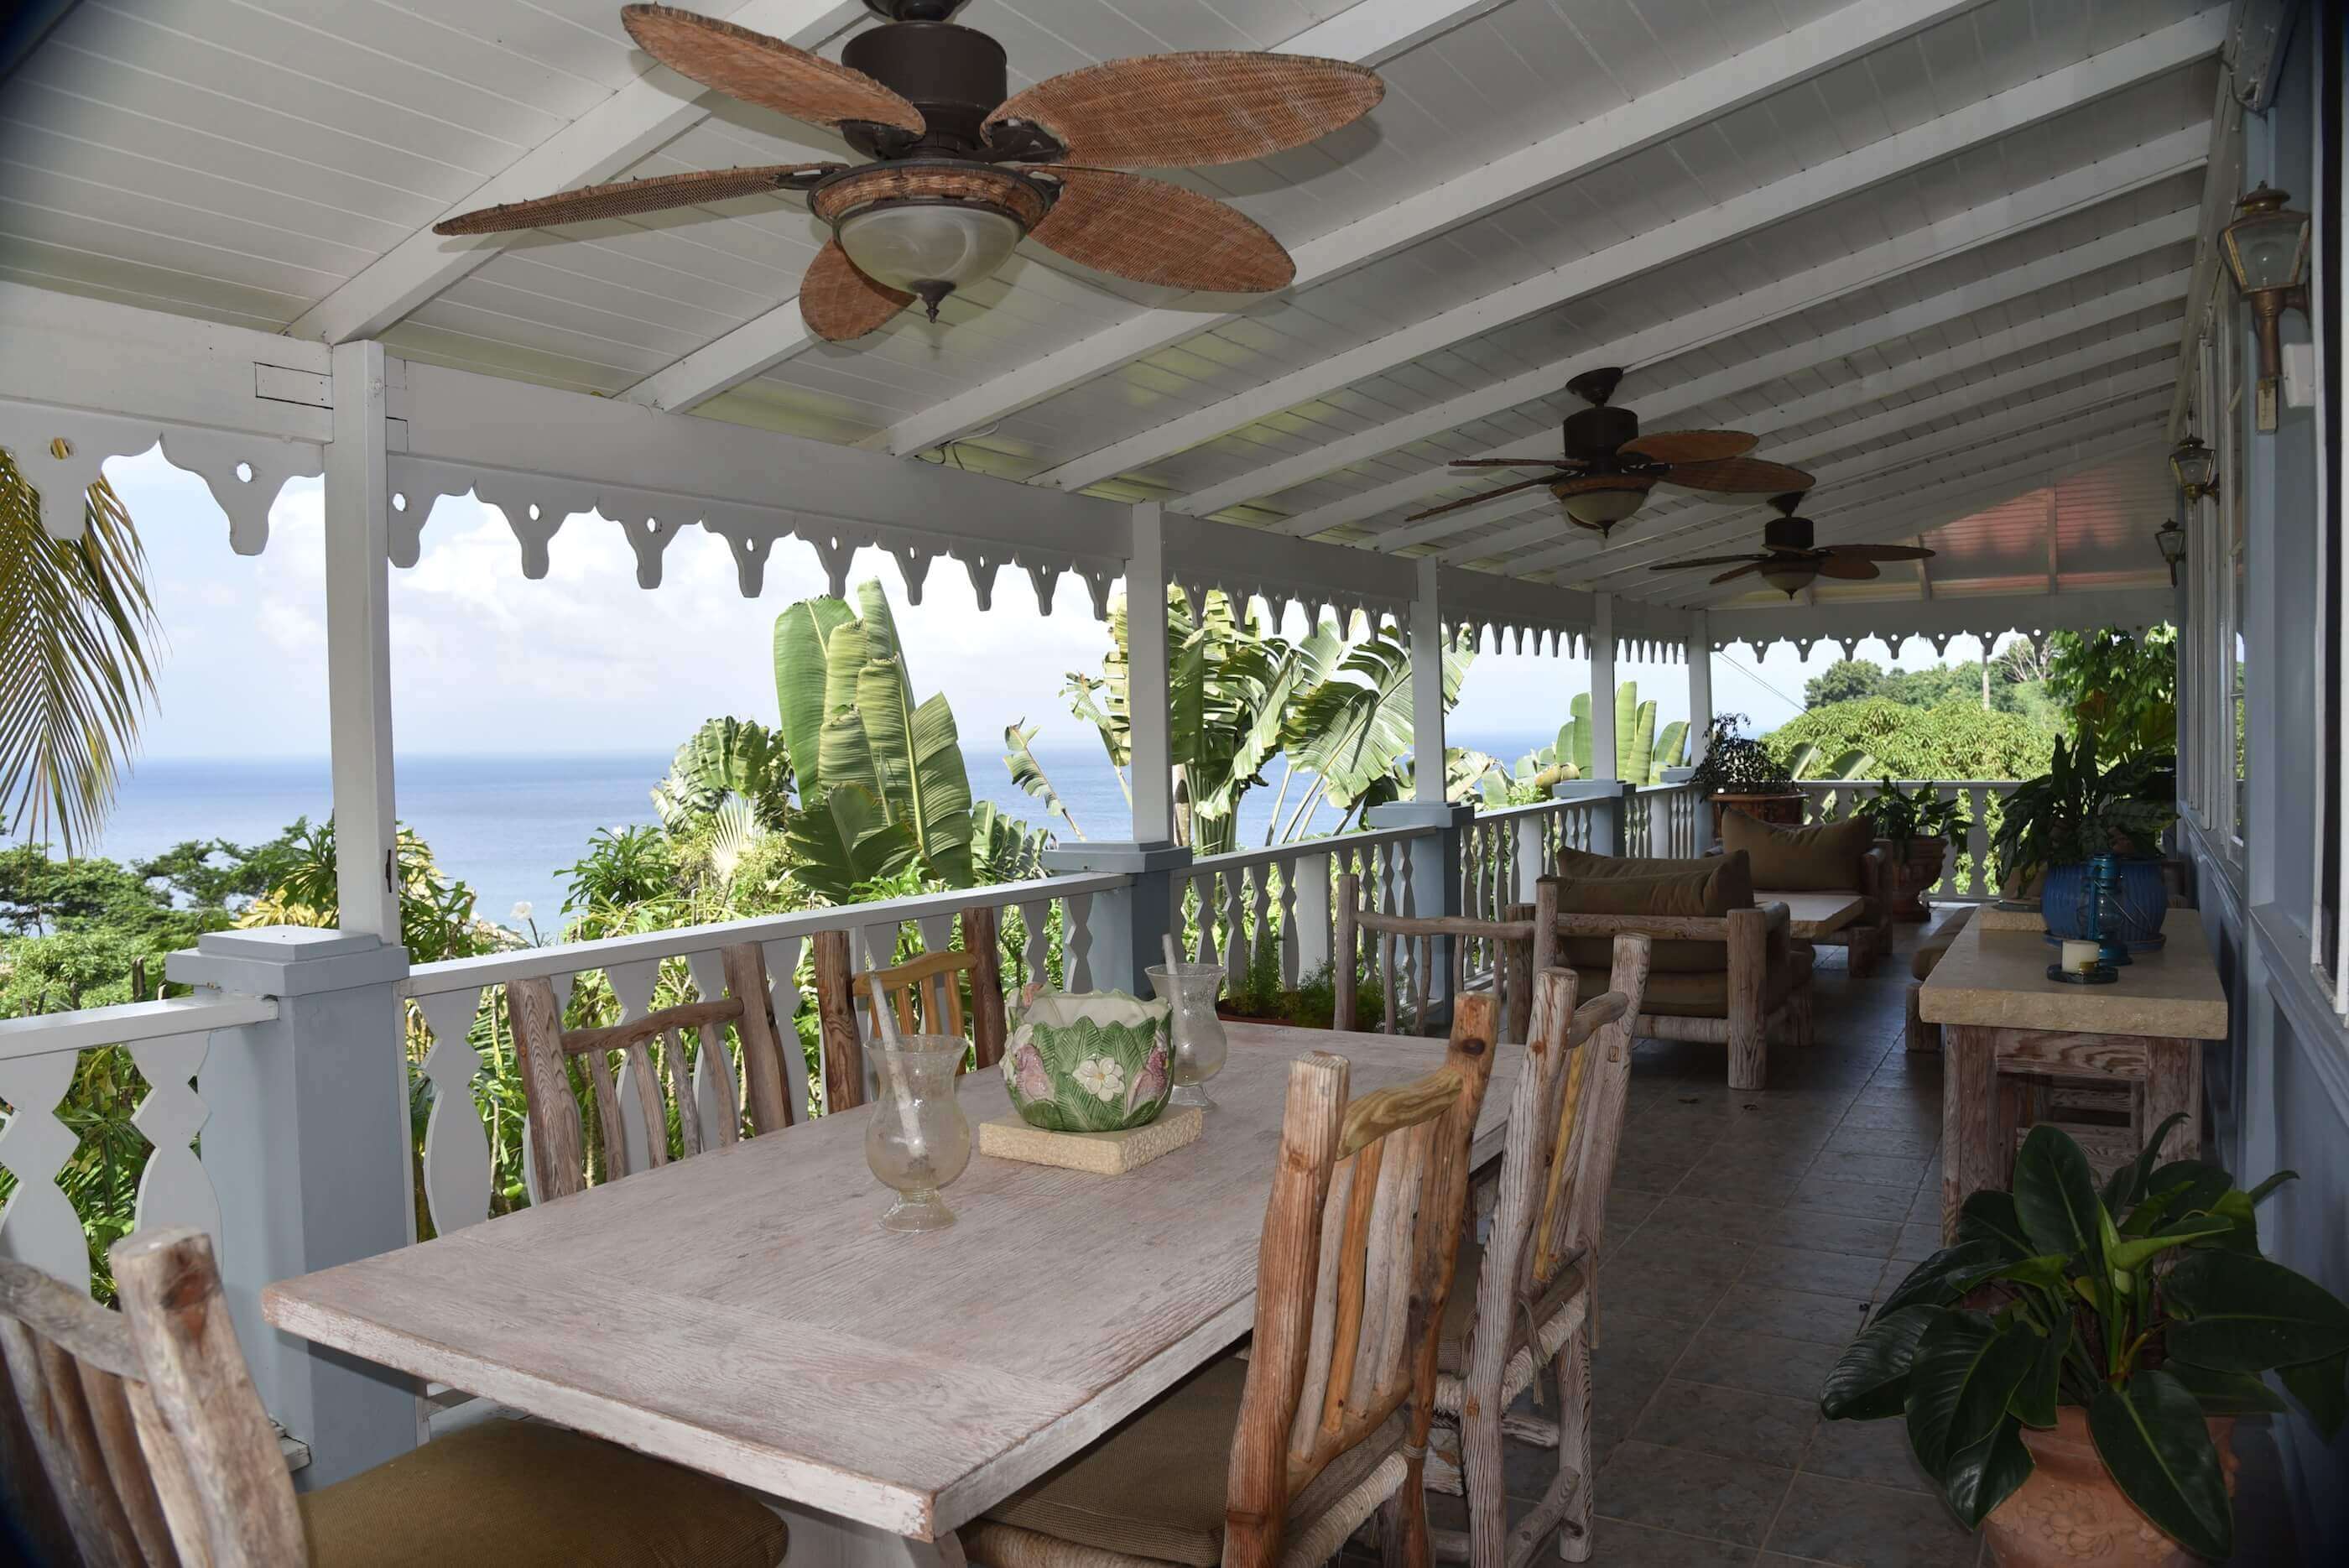 Mount Edgecombe Plantation - Villas for Rent - Victoria, Grenada Island ...